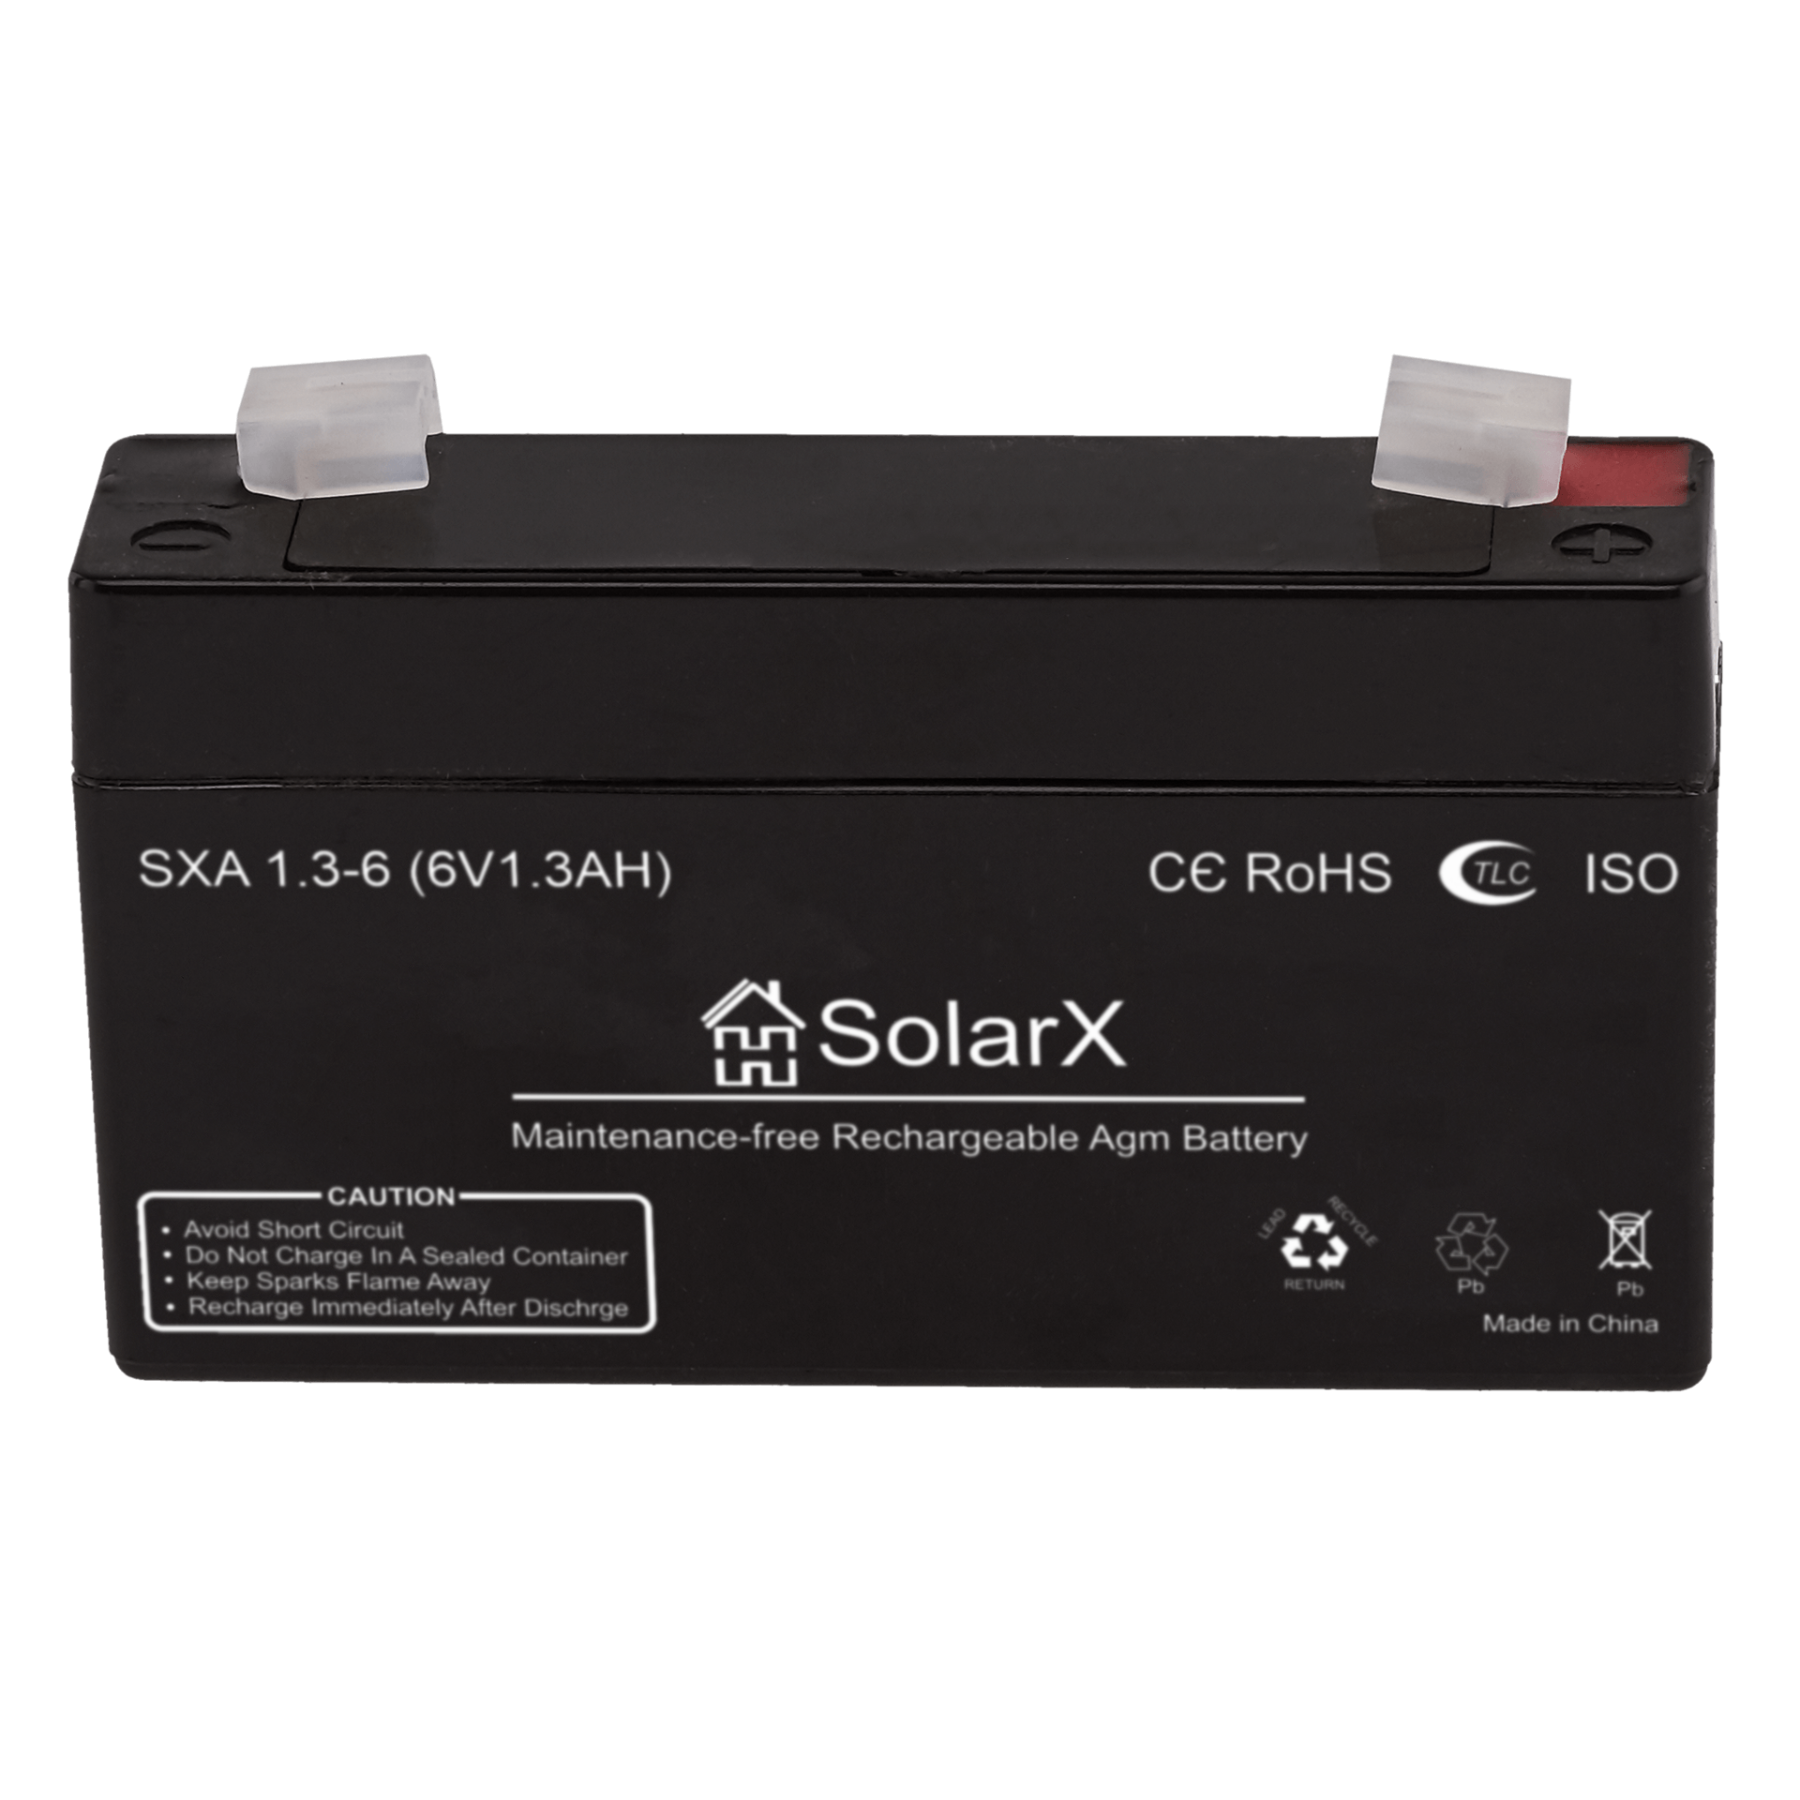 Solarx sxa 1.3 6